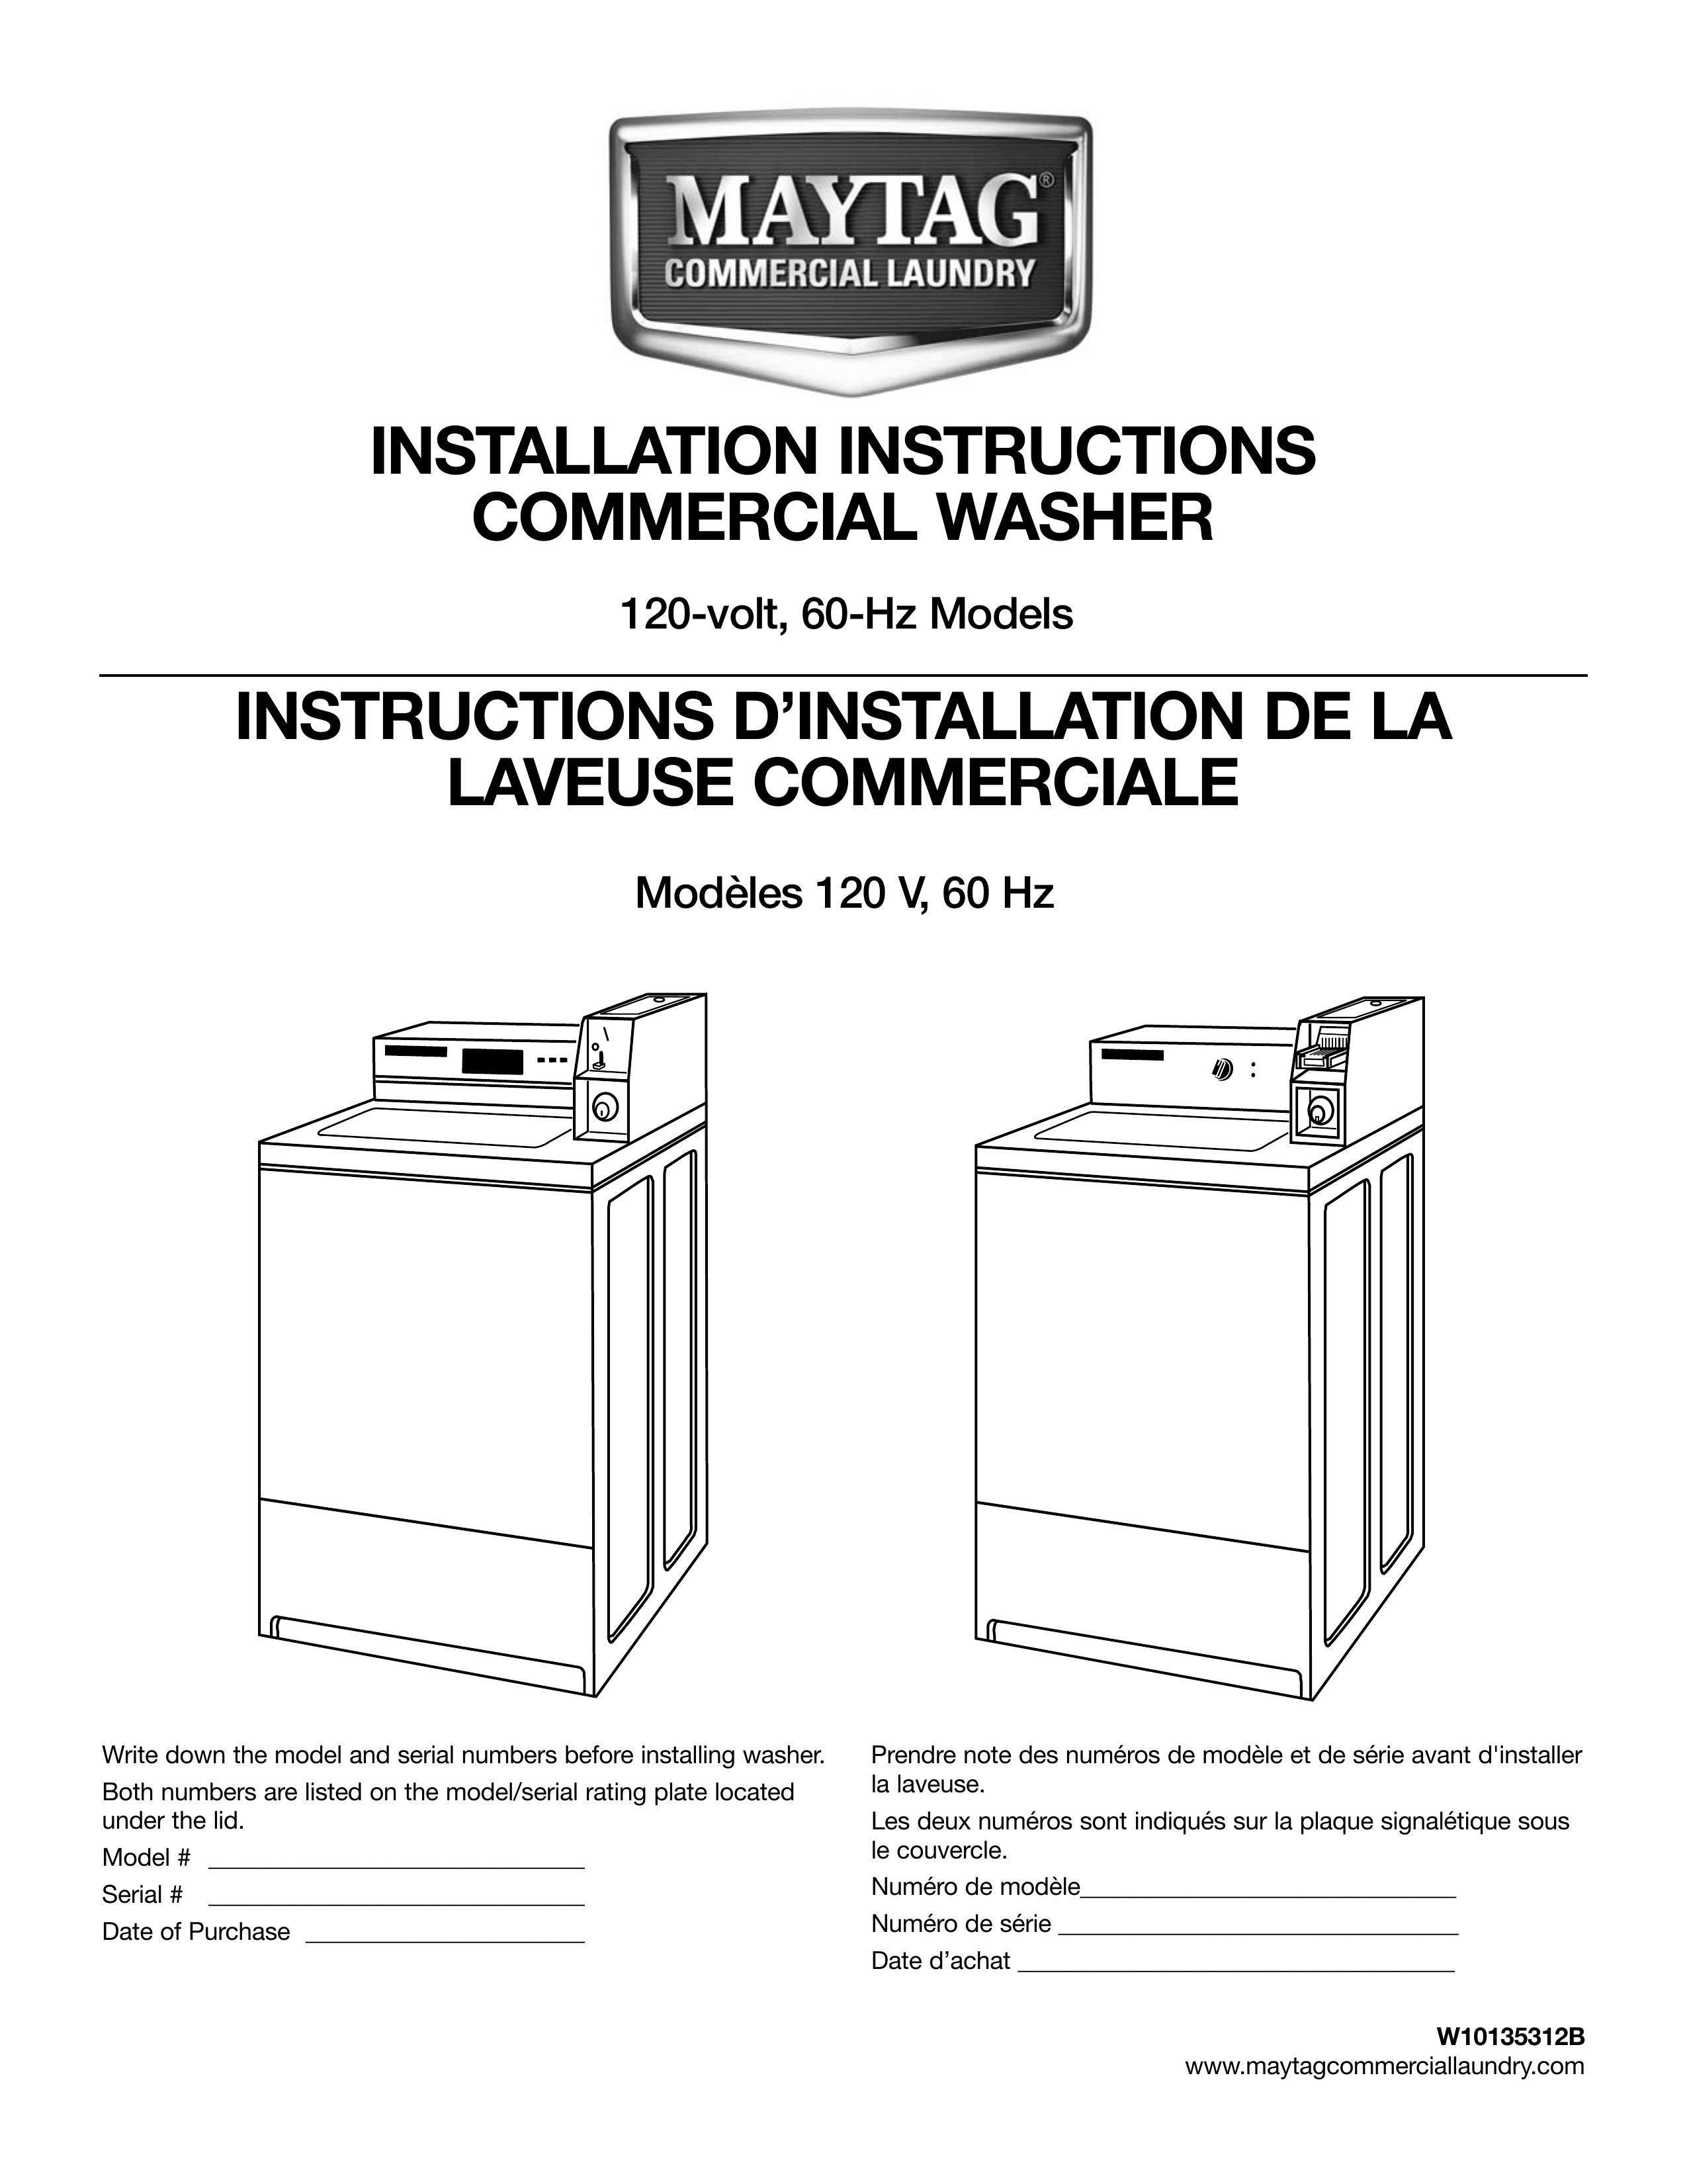 Maytag 120 V Washer User Manual